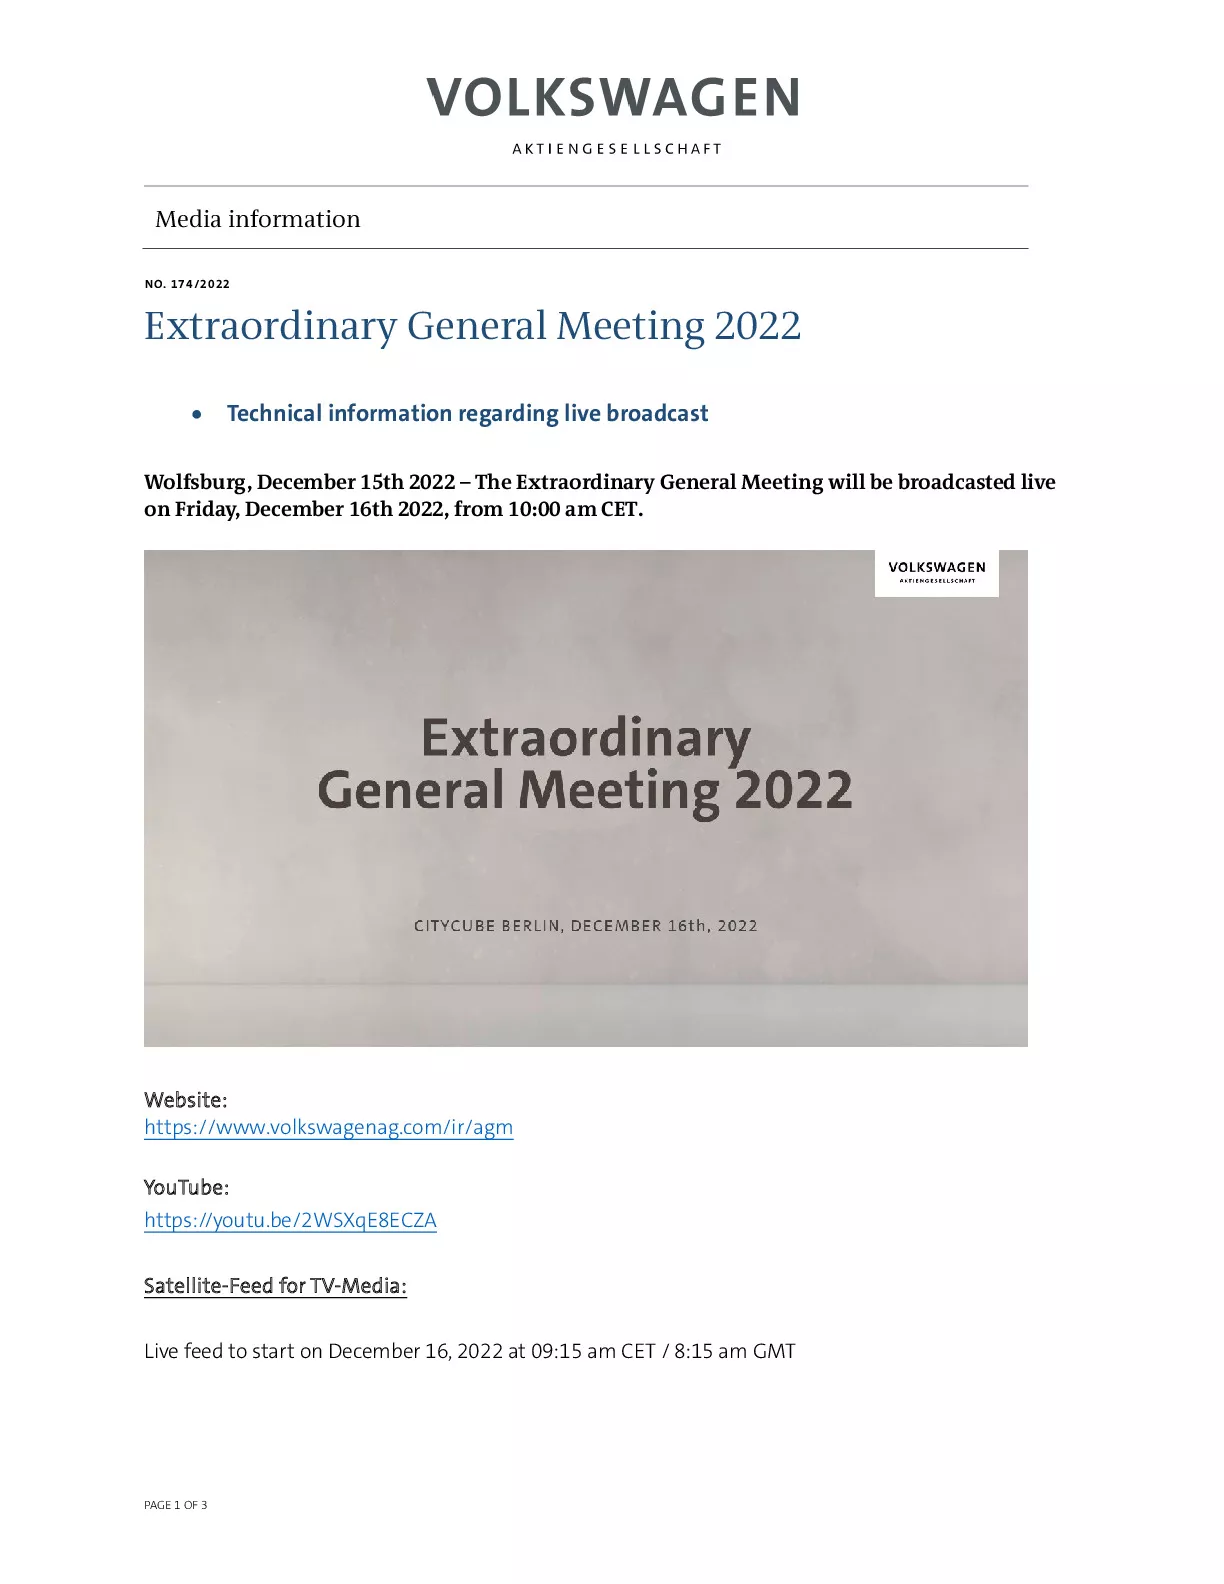 Extraordinary General Meeting 2022-pdf